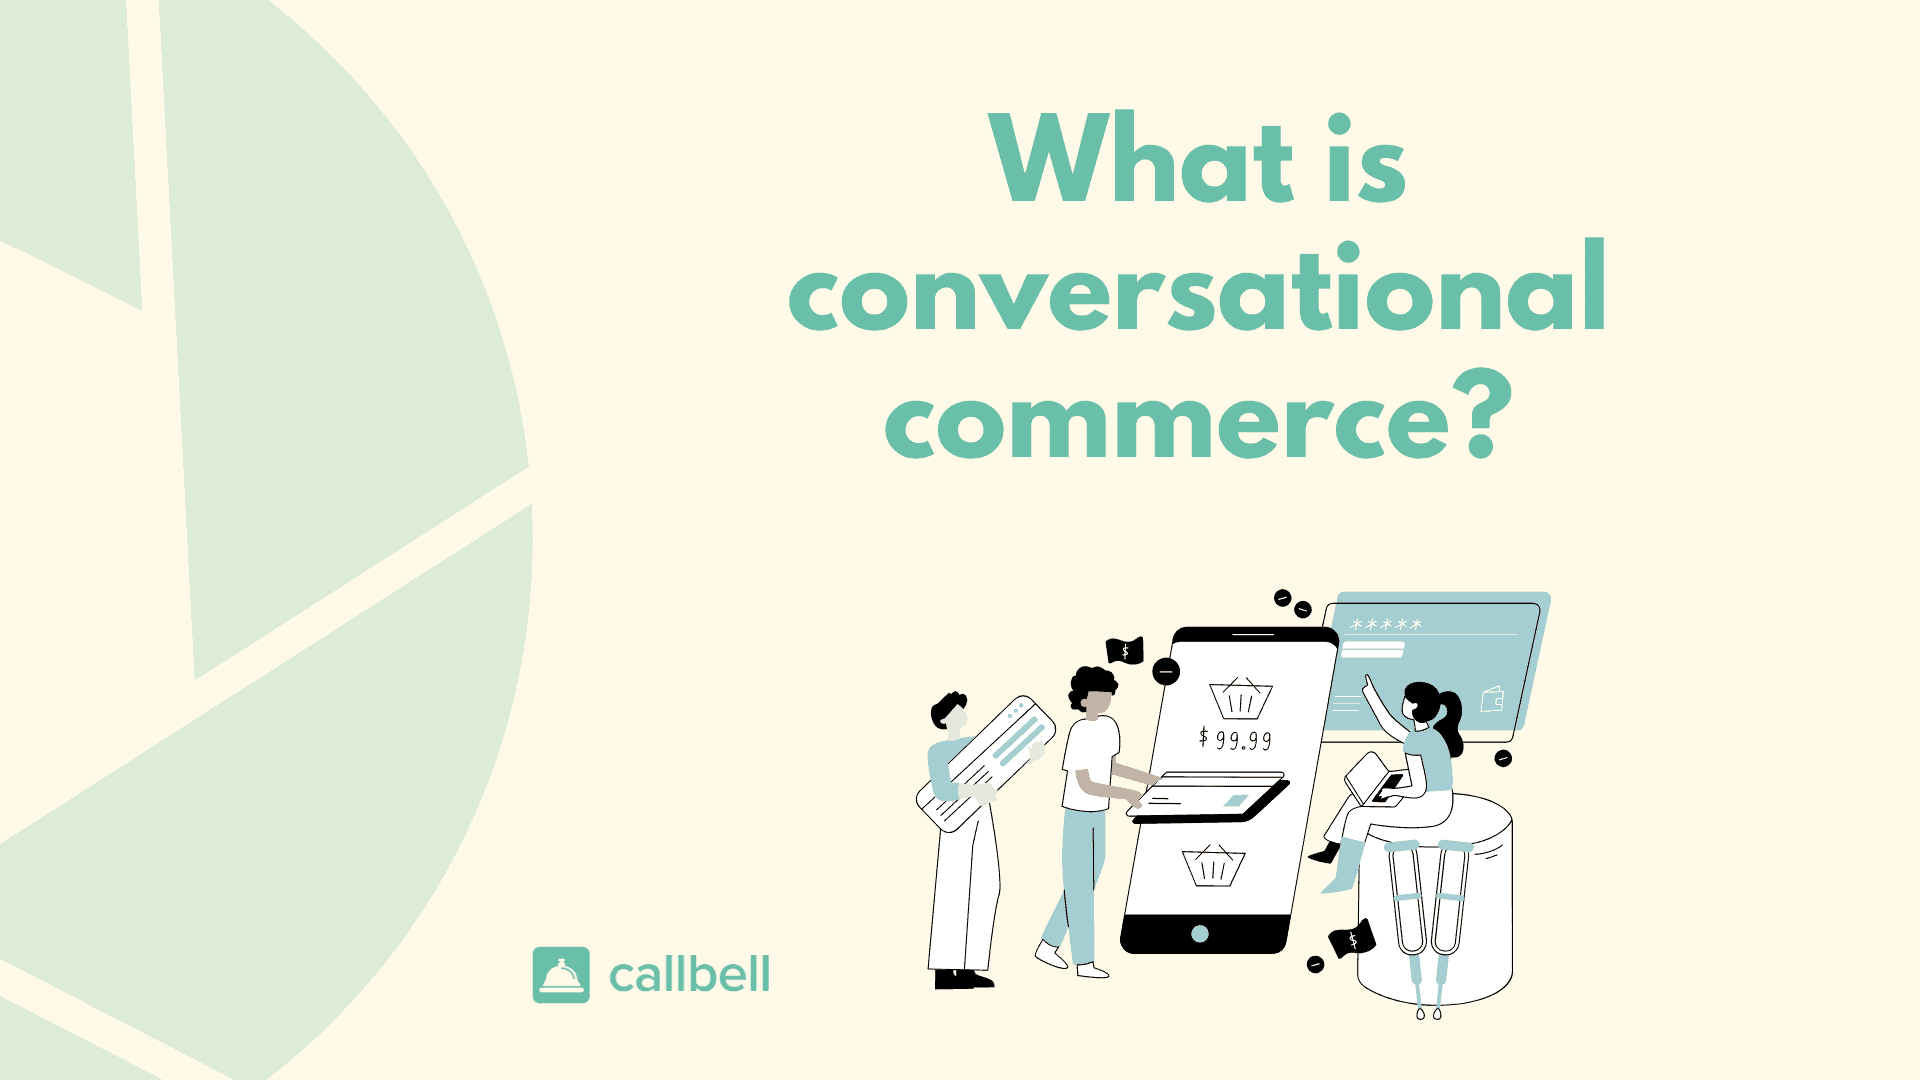 Conversational commerce